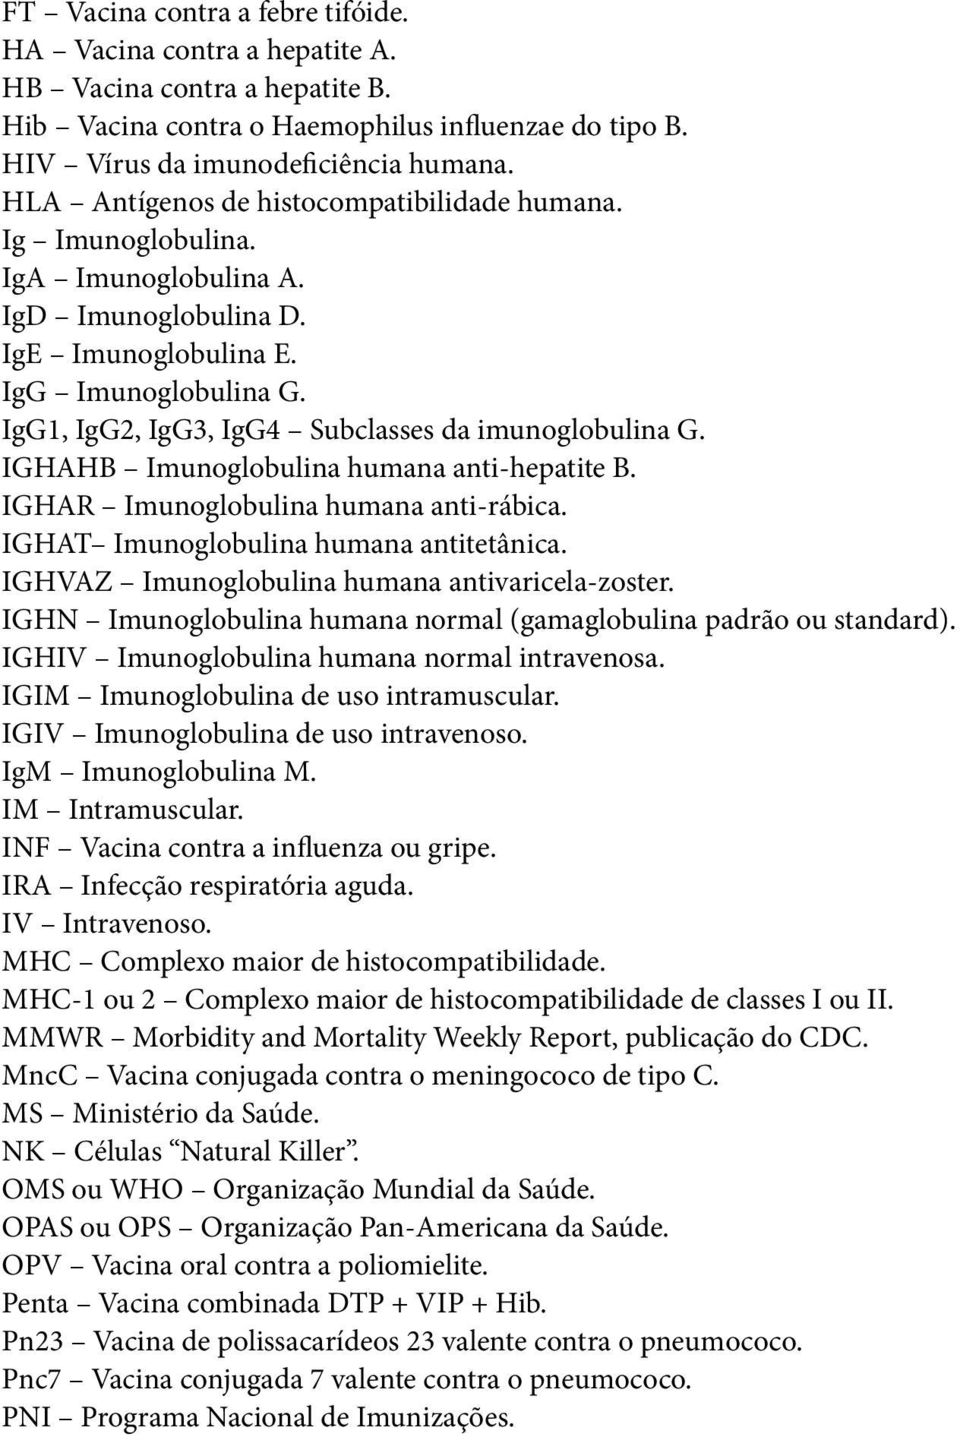 IgG1, IgG2, IgG3, IgG4 Subclasses da imunoglobulina G. IGHAHB Imunoglobulina humana anti-hepatite B. IGHAR Imunoglobulina humana anti-rábica. IGHAT Imunoglobulina humana antitetânica.